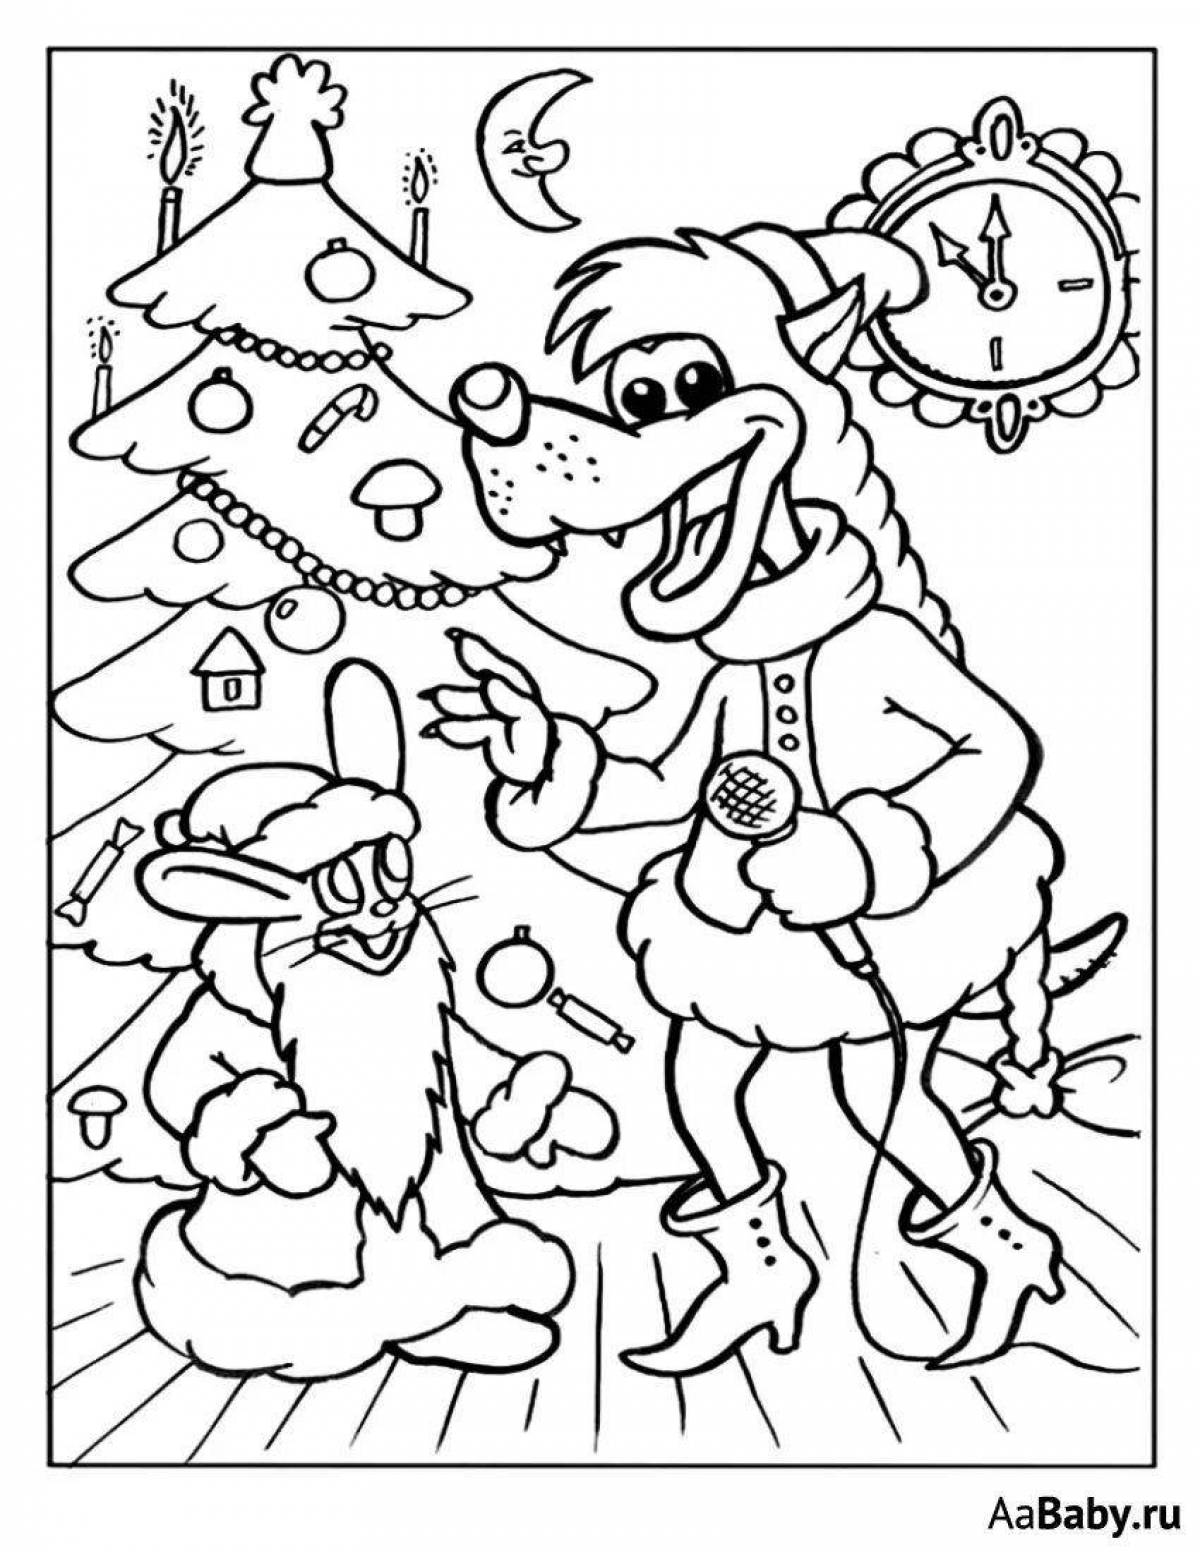 Charming santa claus and gray wolf coloring book